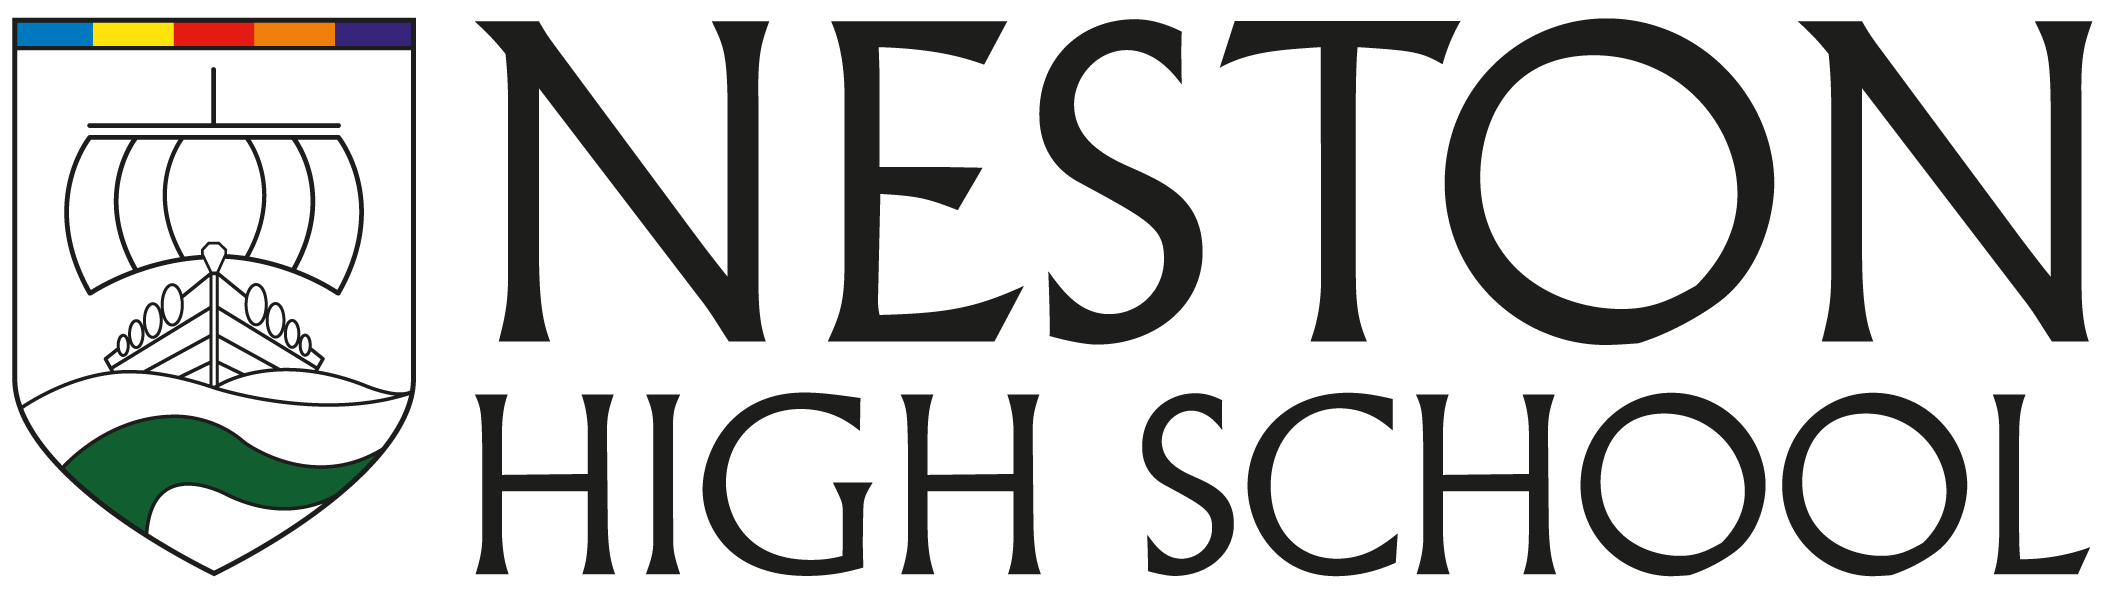 Neston High Schoool Logo